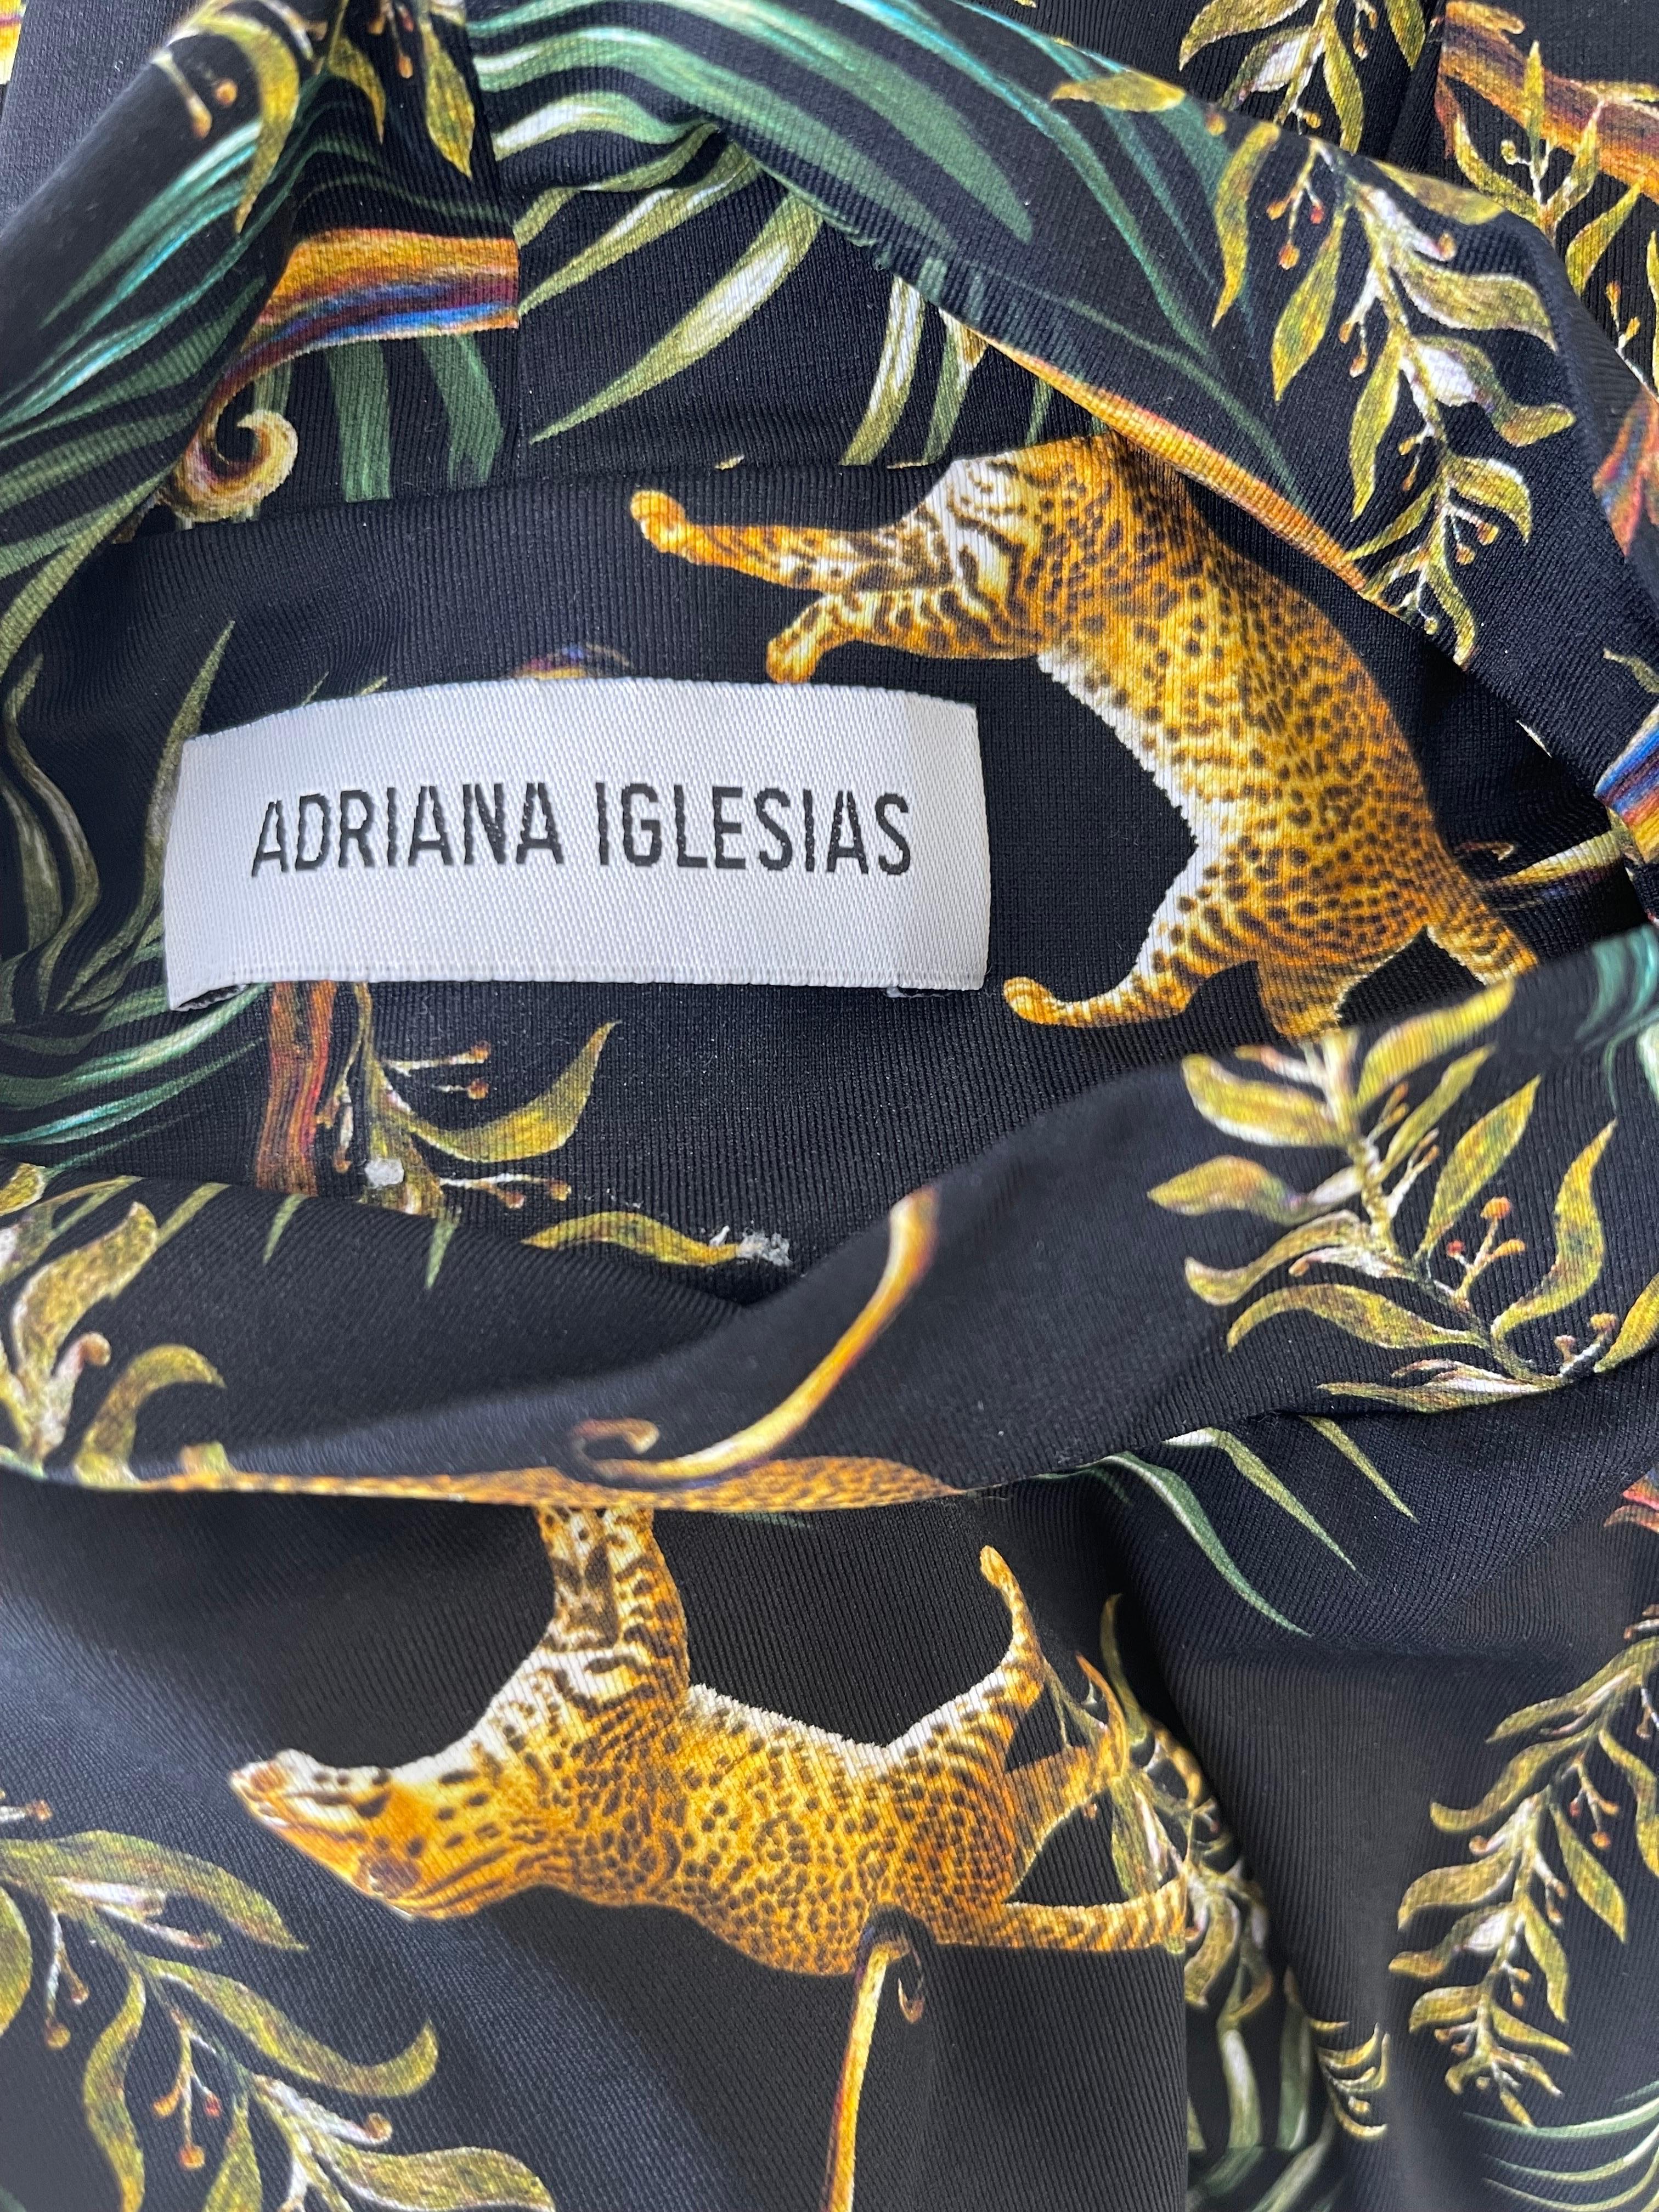 Black New Adriana Iglesias Cheetah Leopard Novelty Animal Print Bodycon Mini Dress For Sale